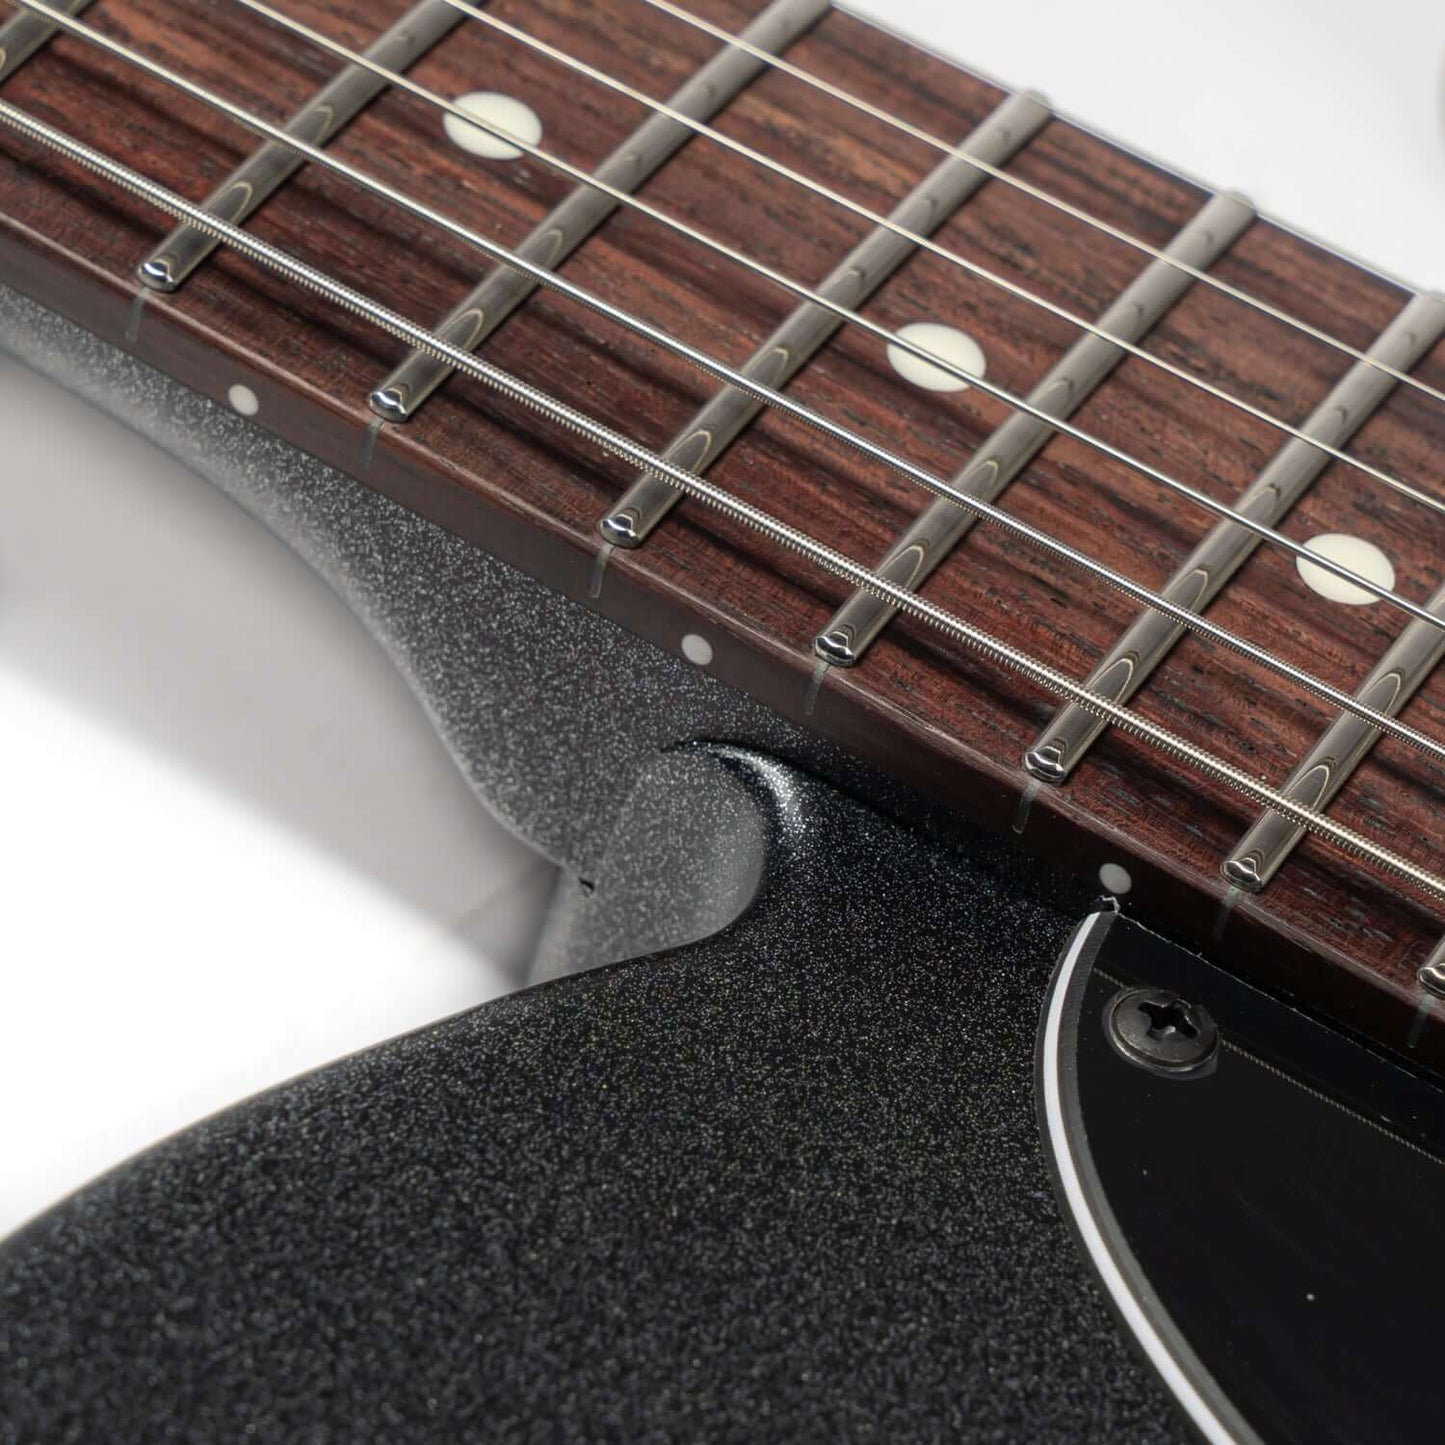 EART TL-281 electric guitar neck detail